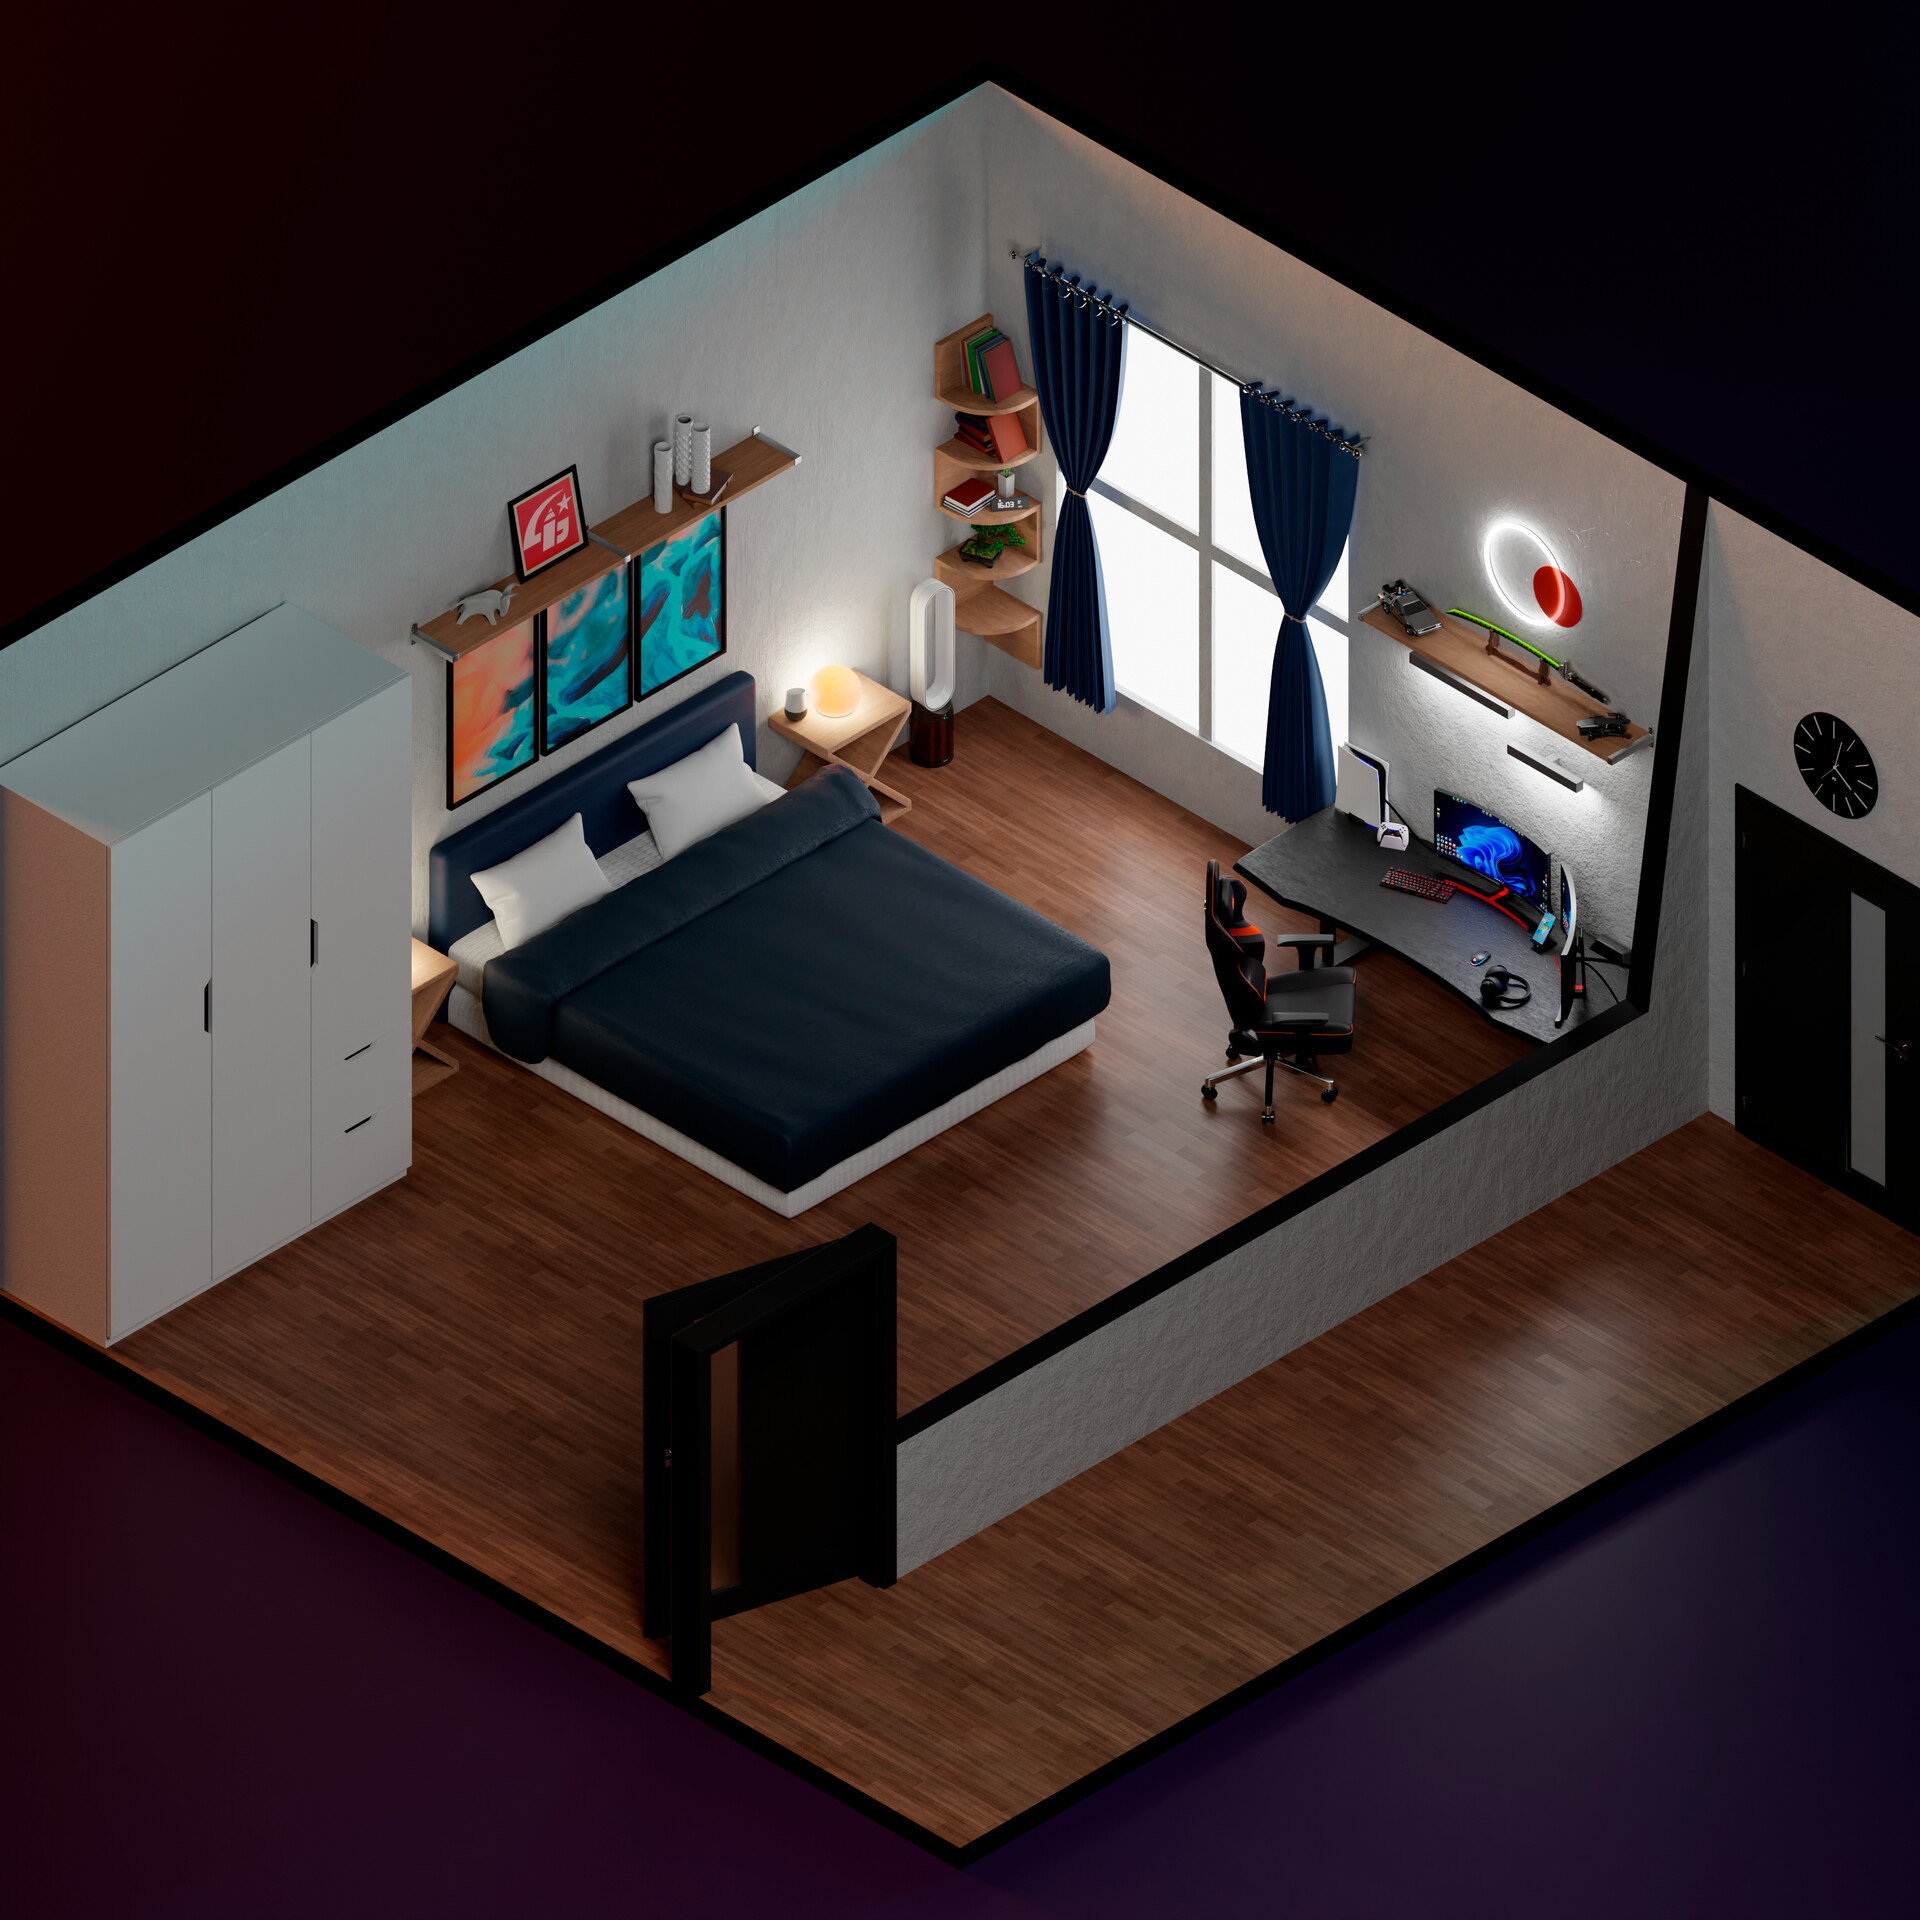 ArtStation - Isometric bedrooms